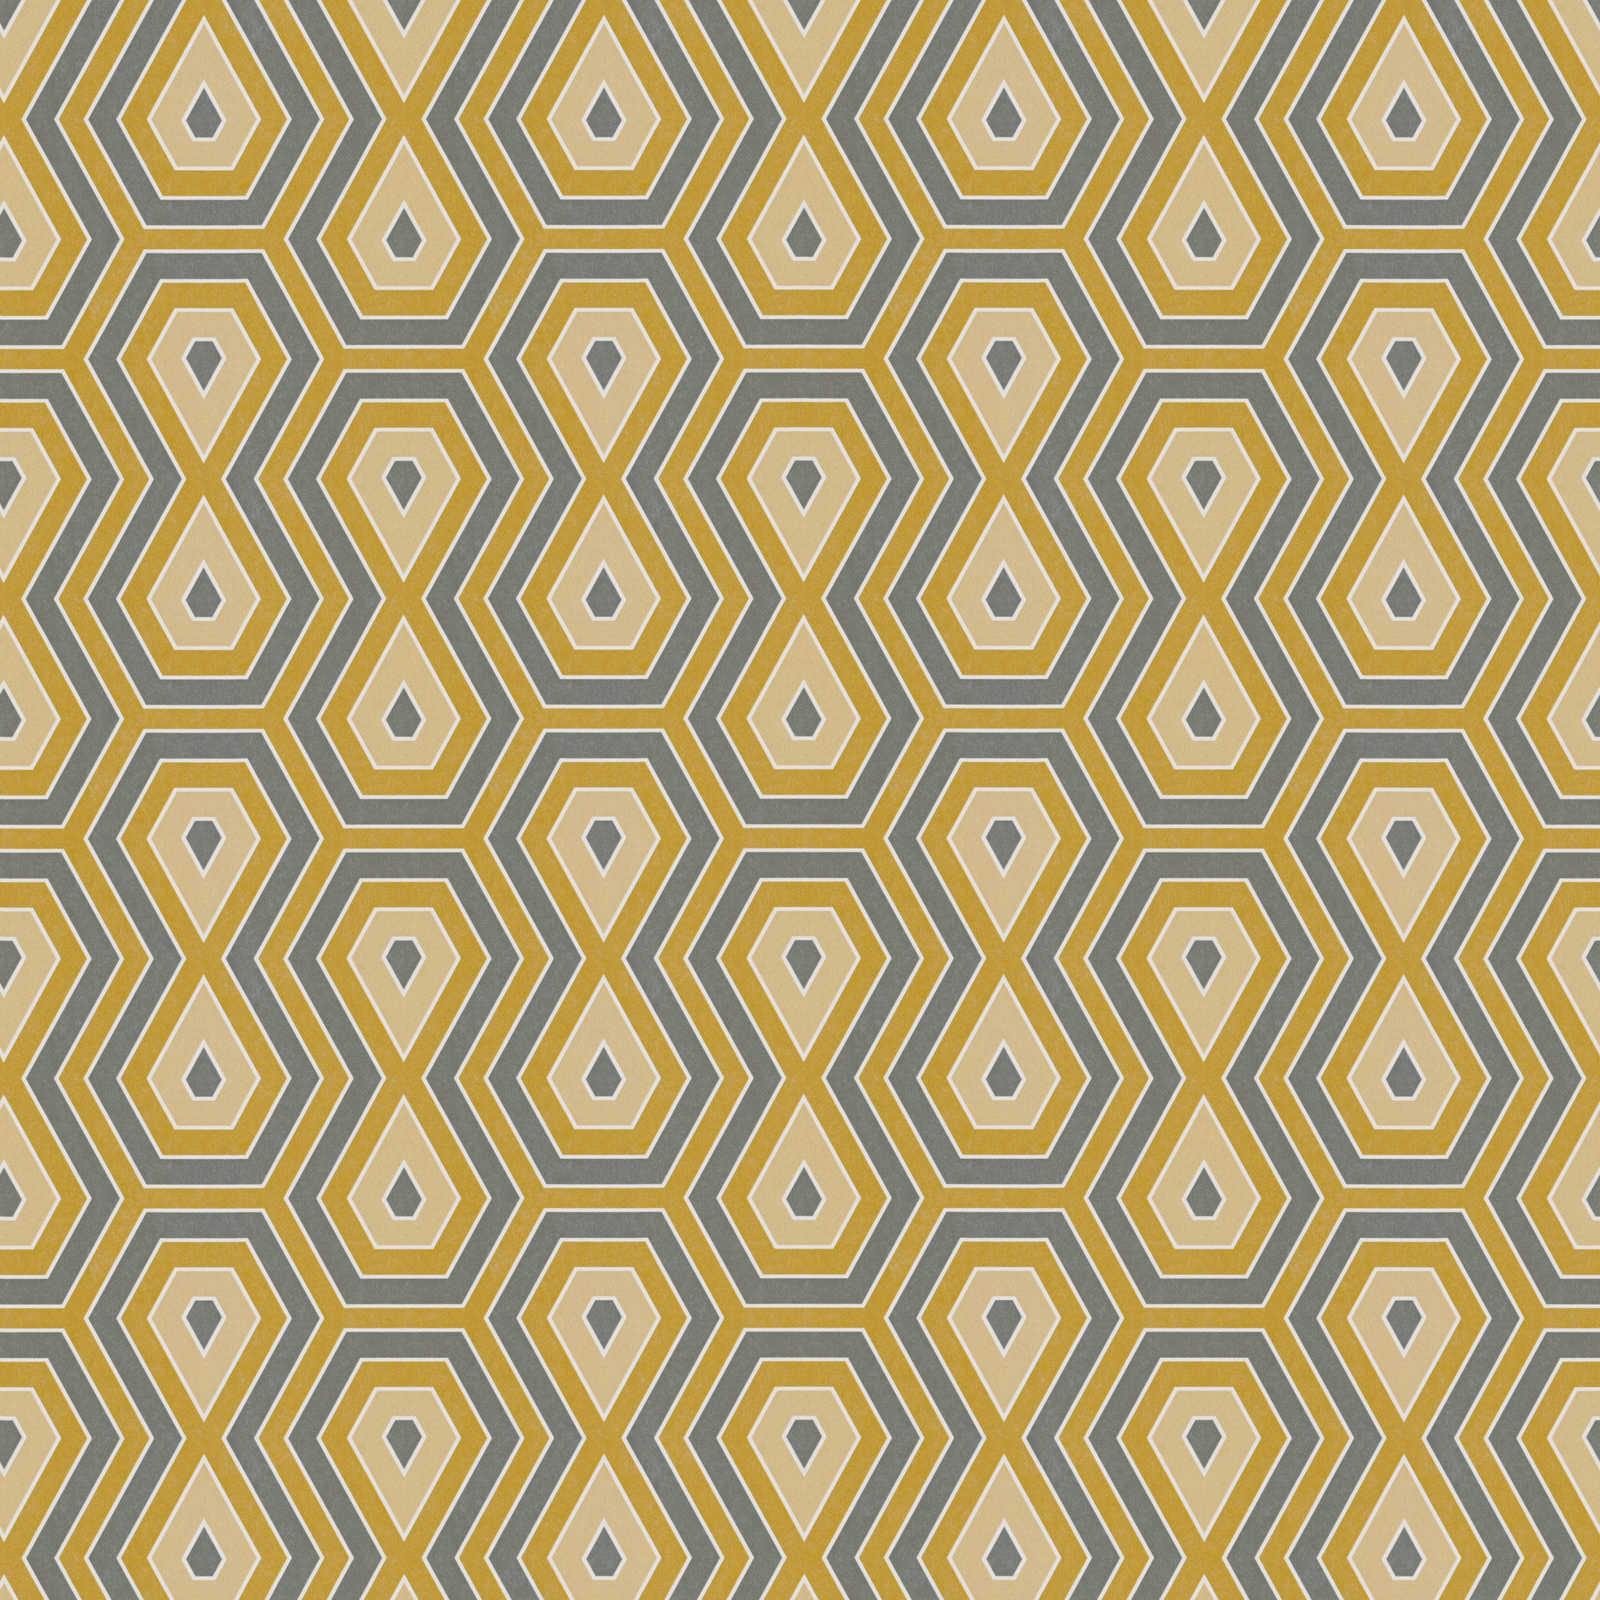         Vliestapete Grau Gelb 70er Retro Grafik Muster – Gelb, Grau, Weiß
    